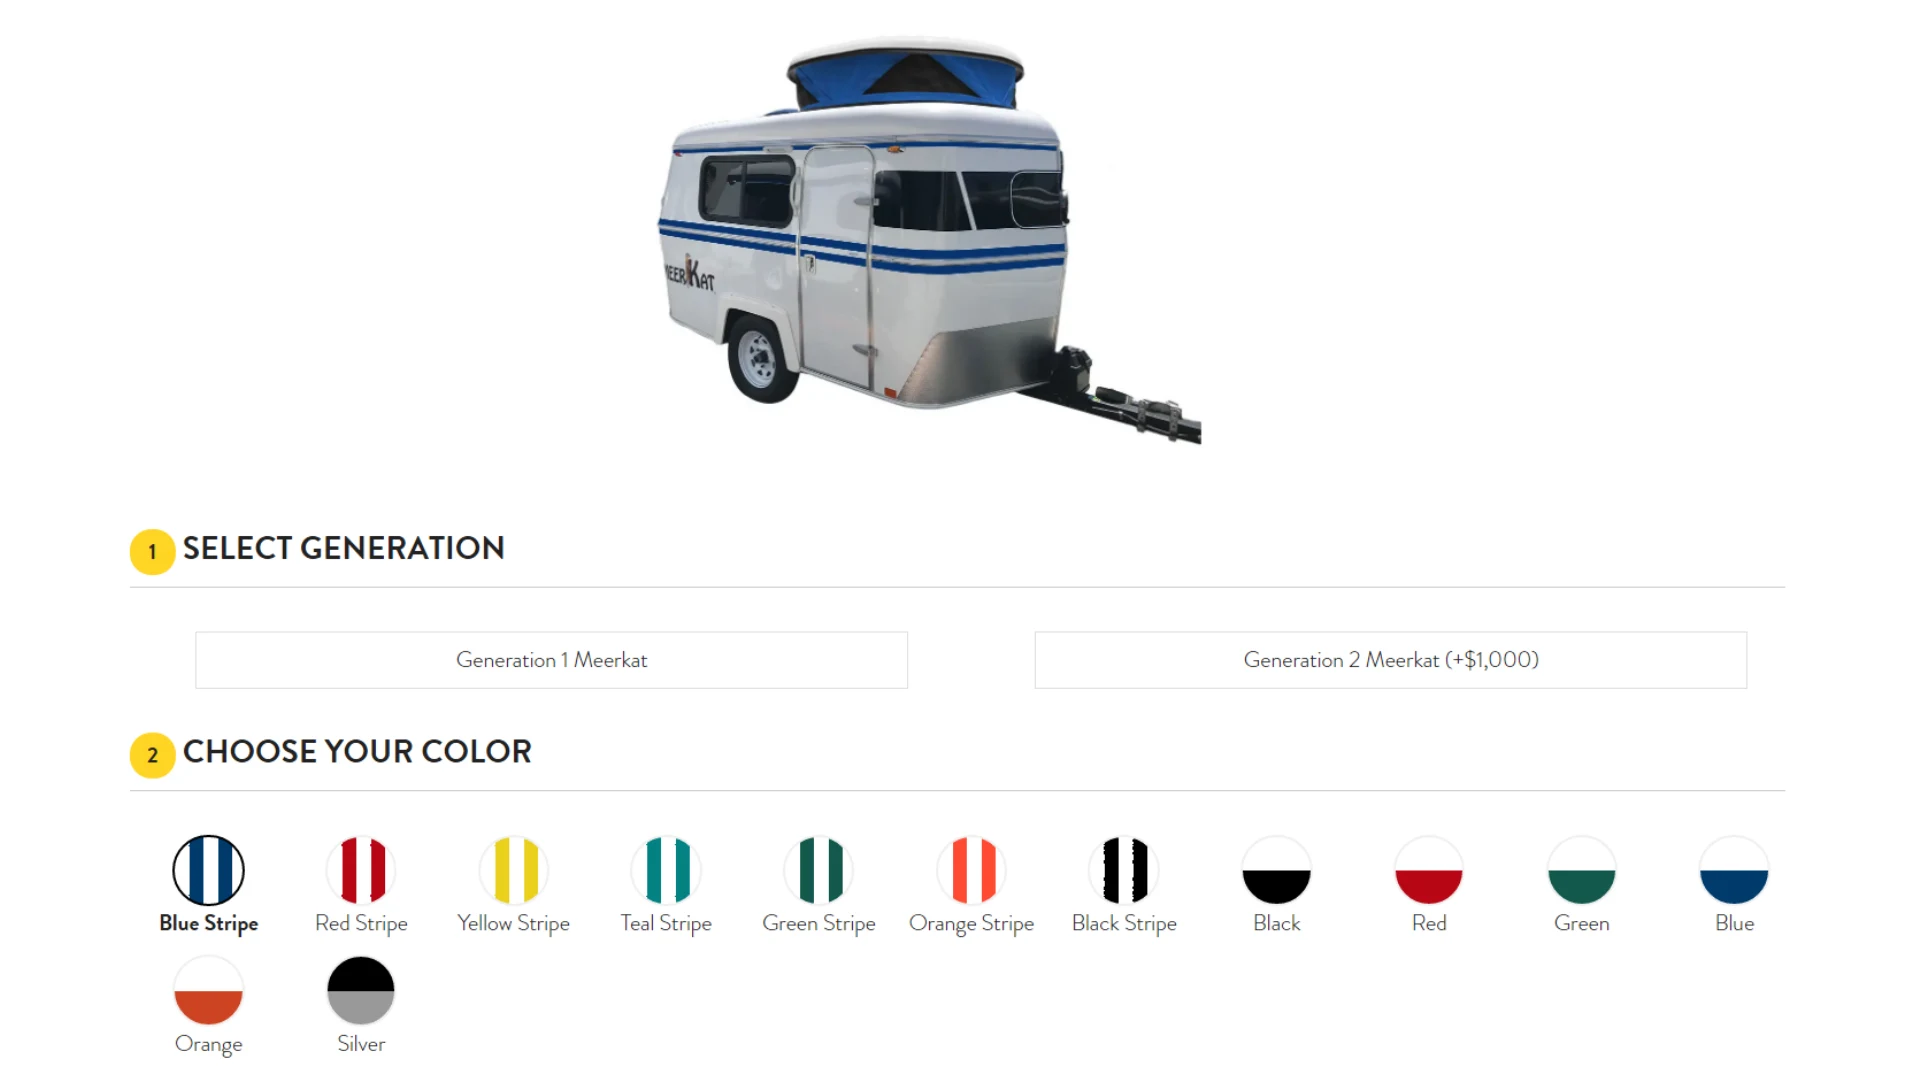 Meerkat trailer customization screen from company website